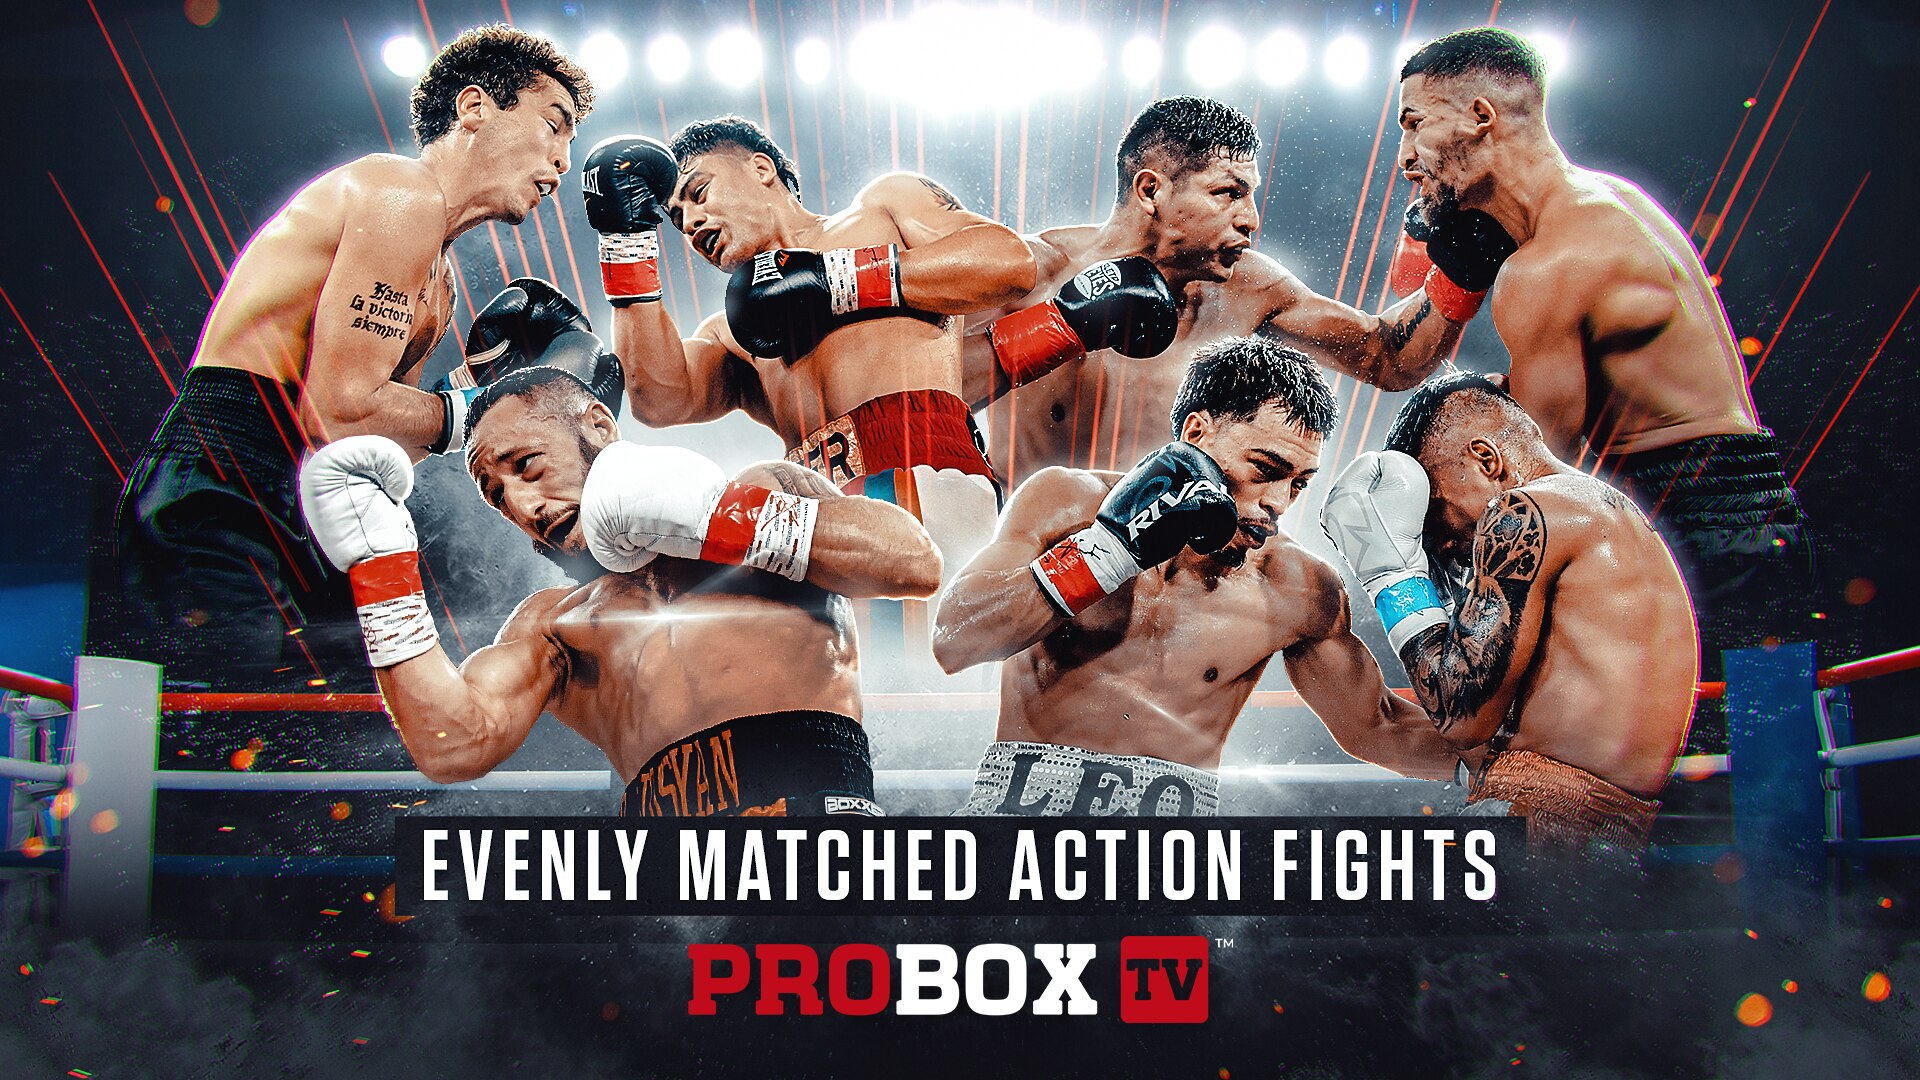 ProBox TV Fights